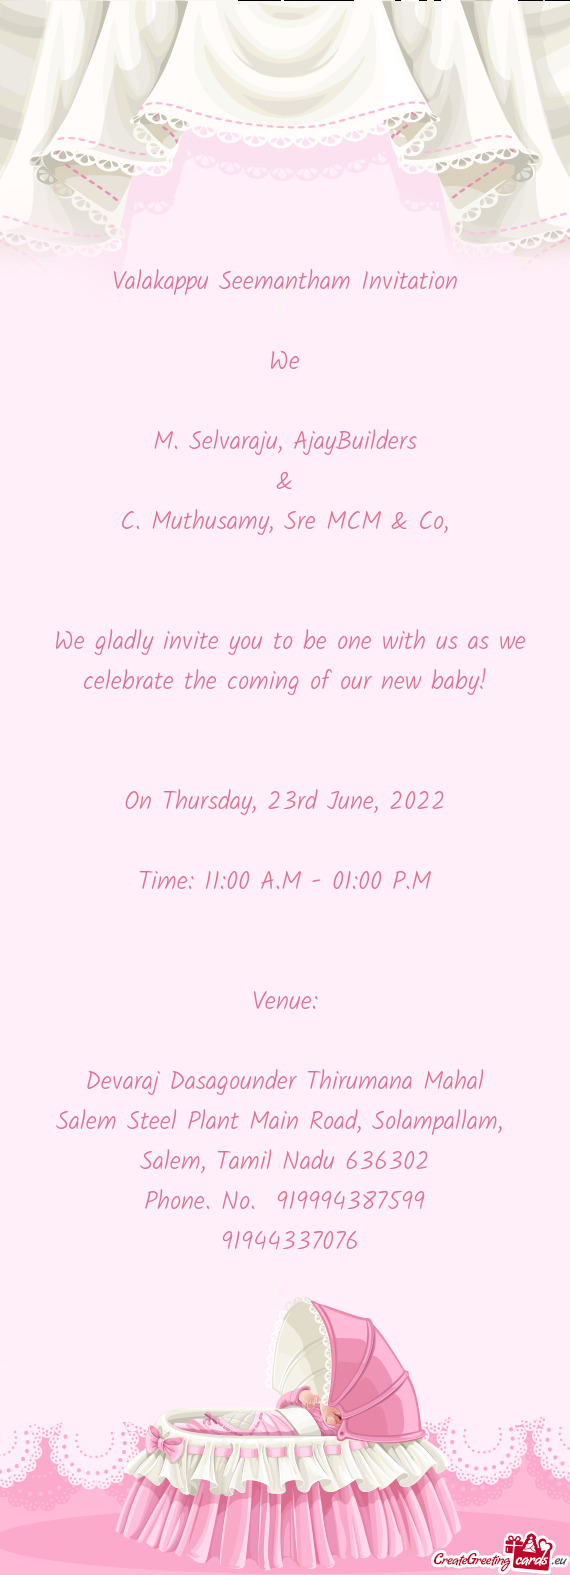 C. Muthusamy, Sre MCM & Co